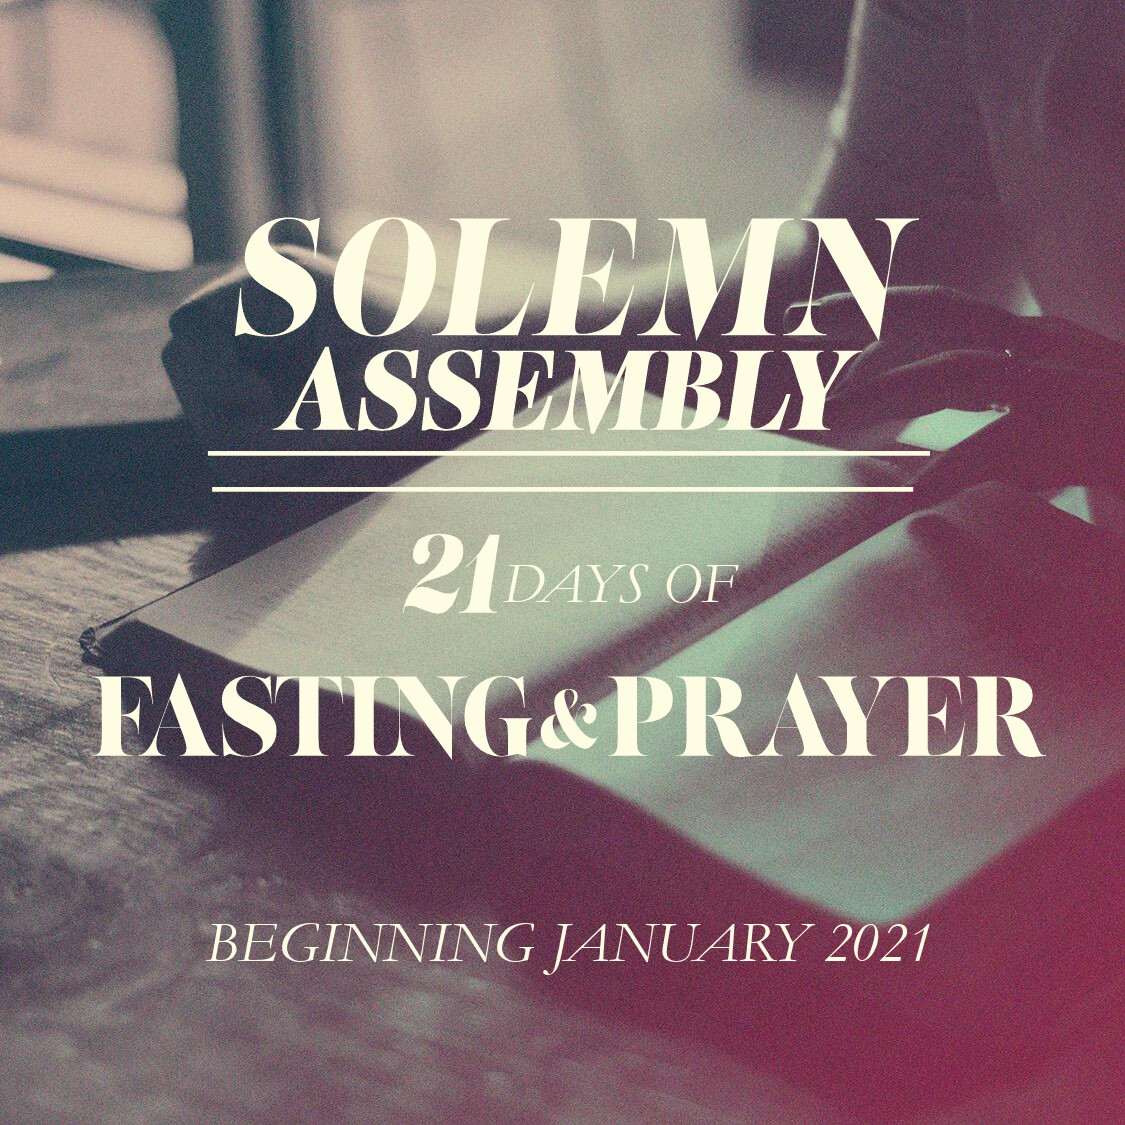 Solemn Assembly Fasting & Prayer